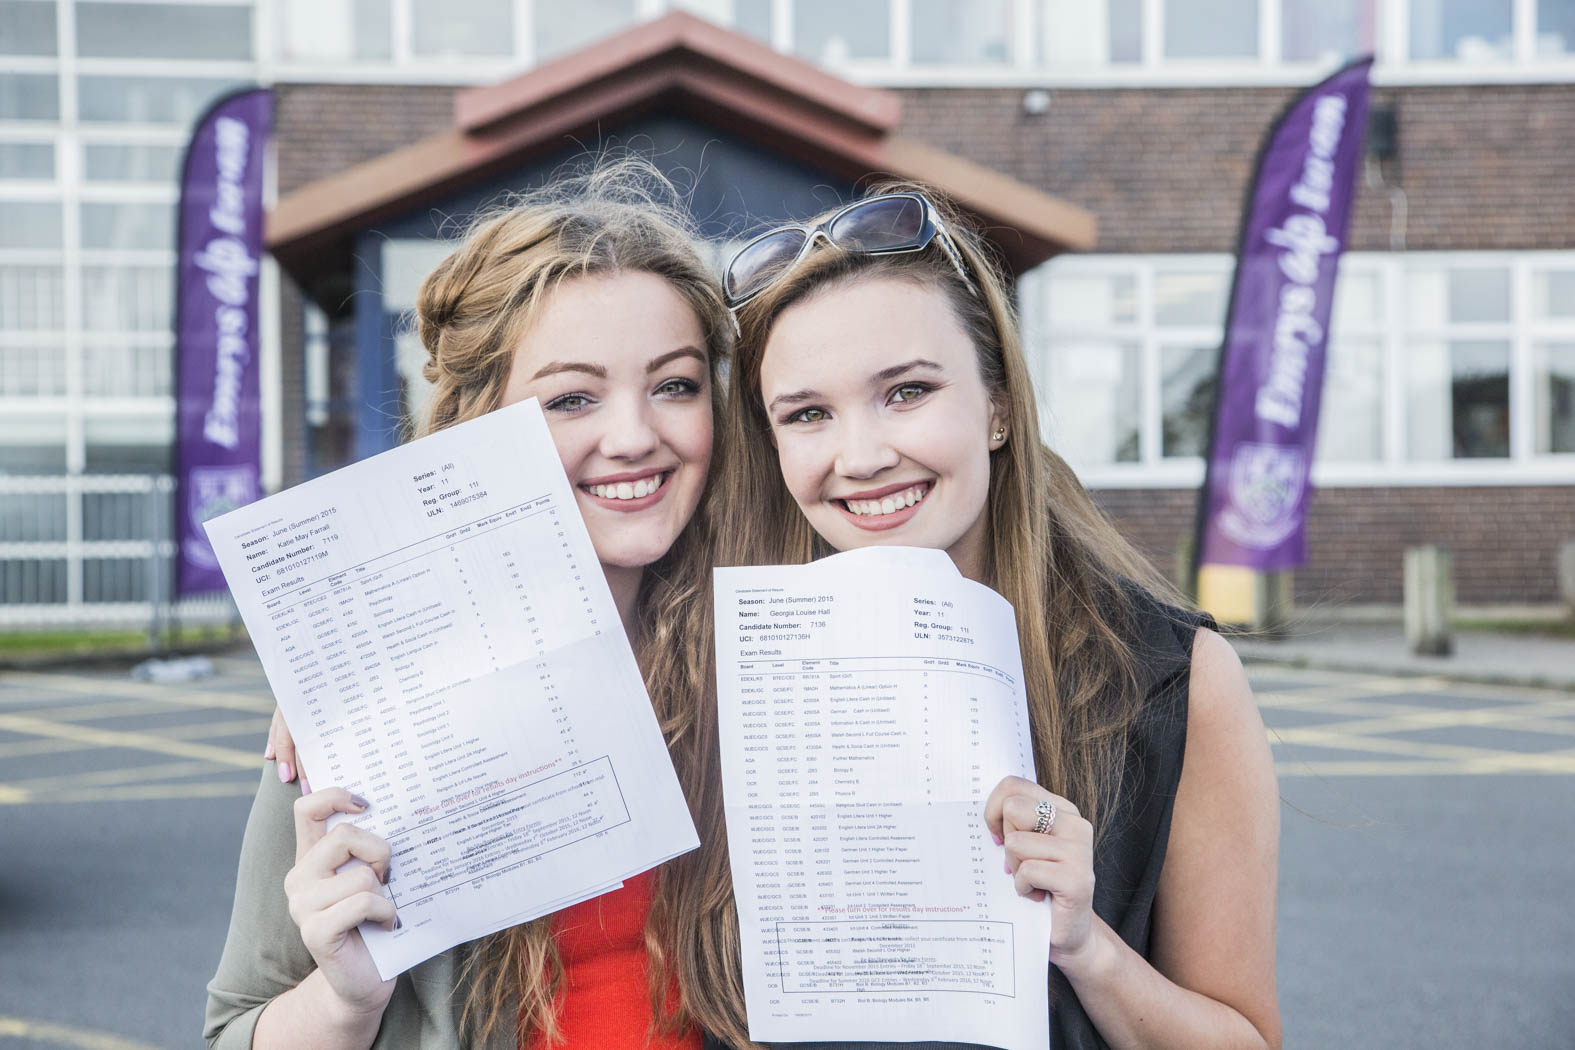 Ysgol Emrys ap Iwan celebrates more “fantastic” GCSE results